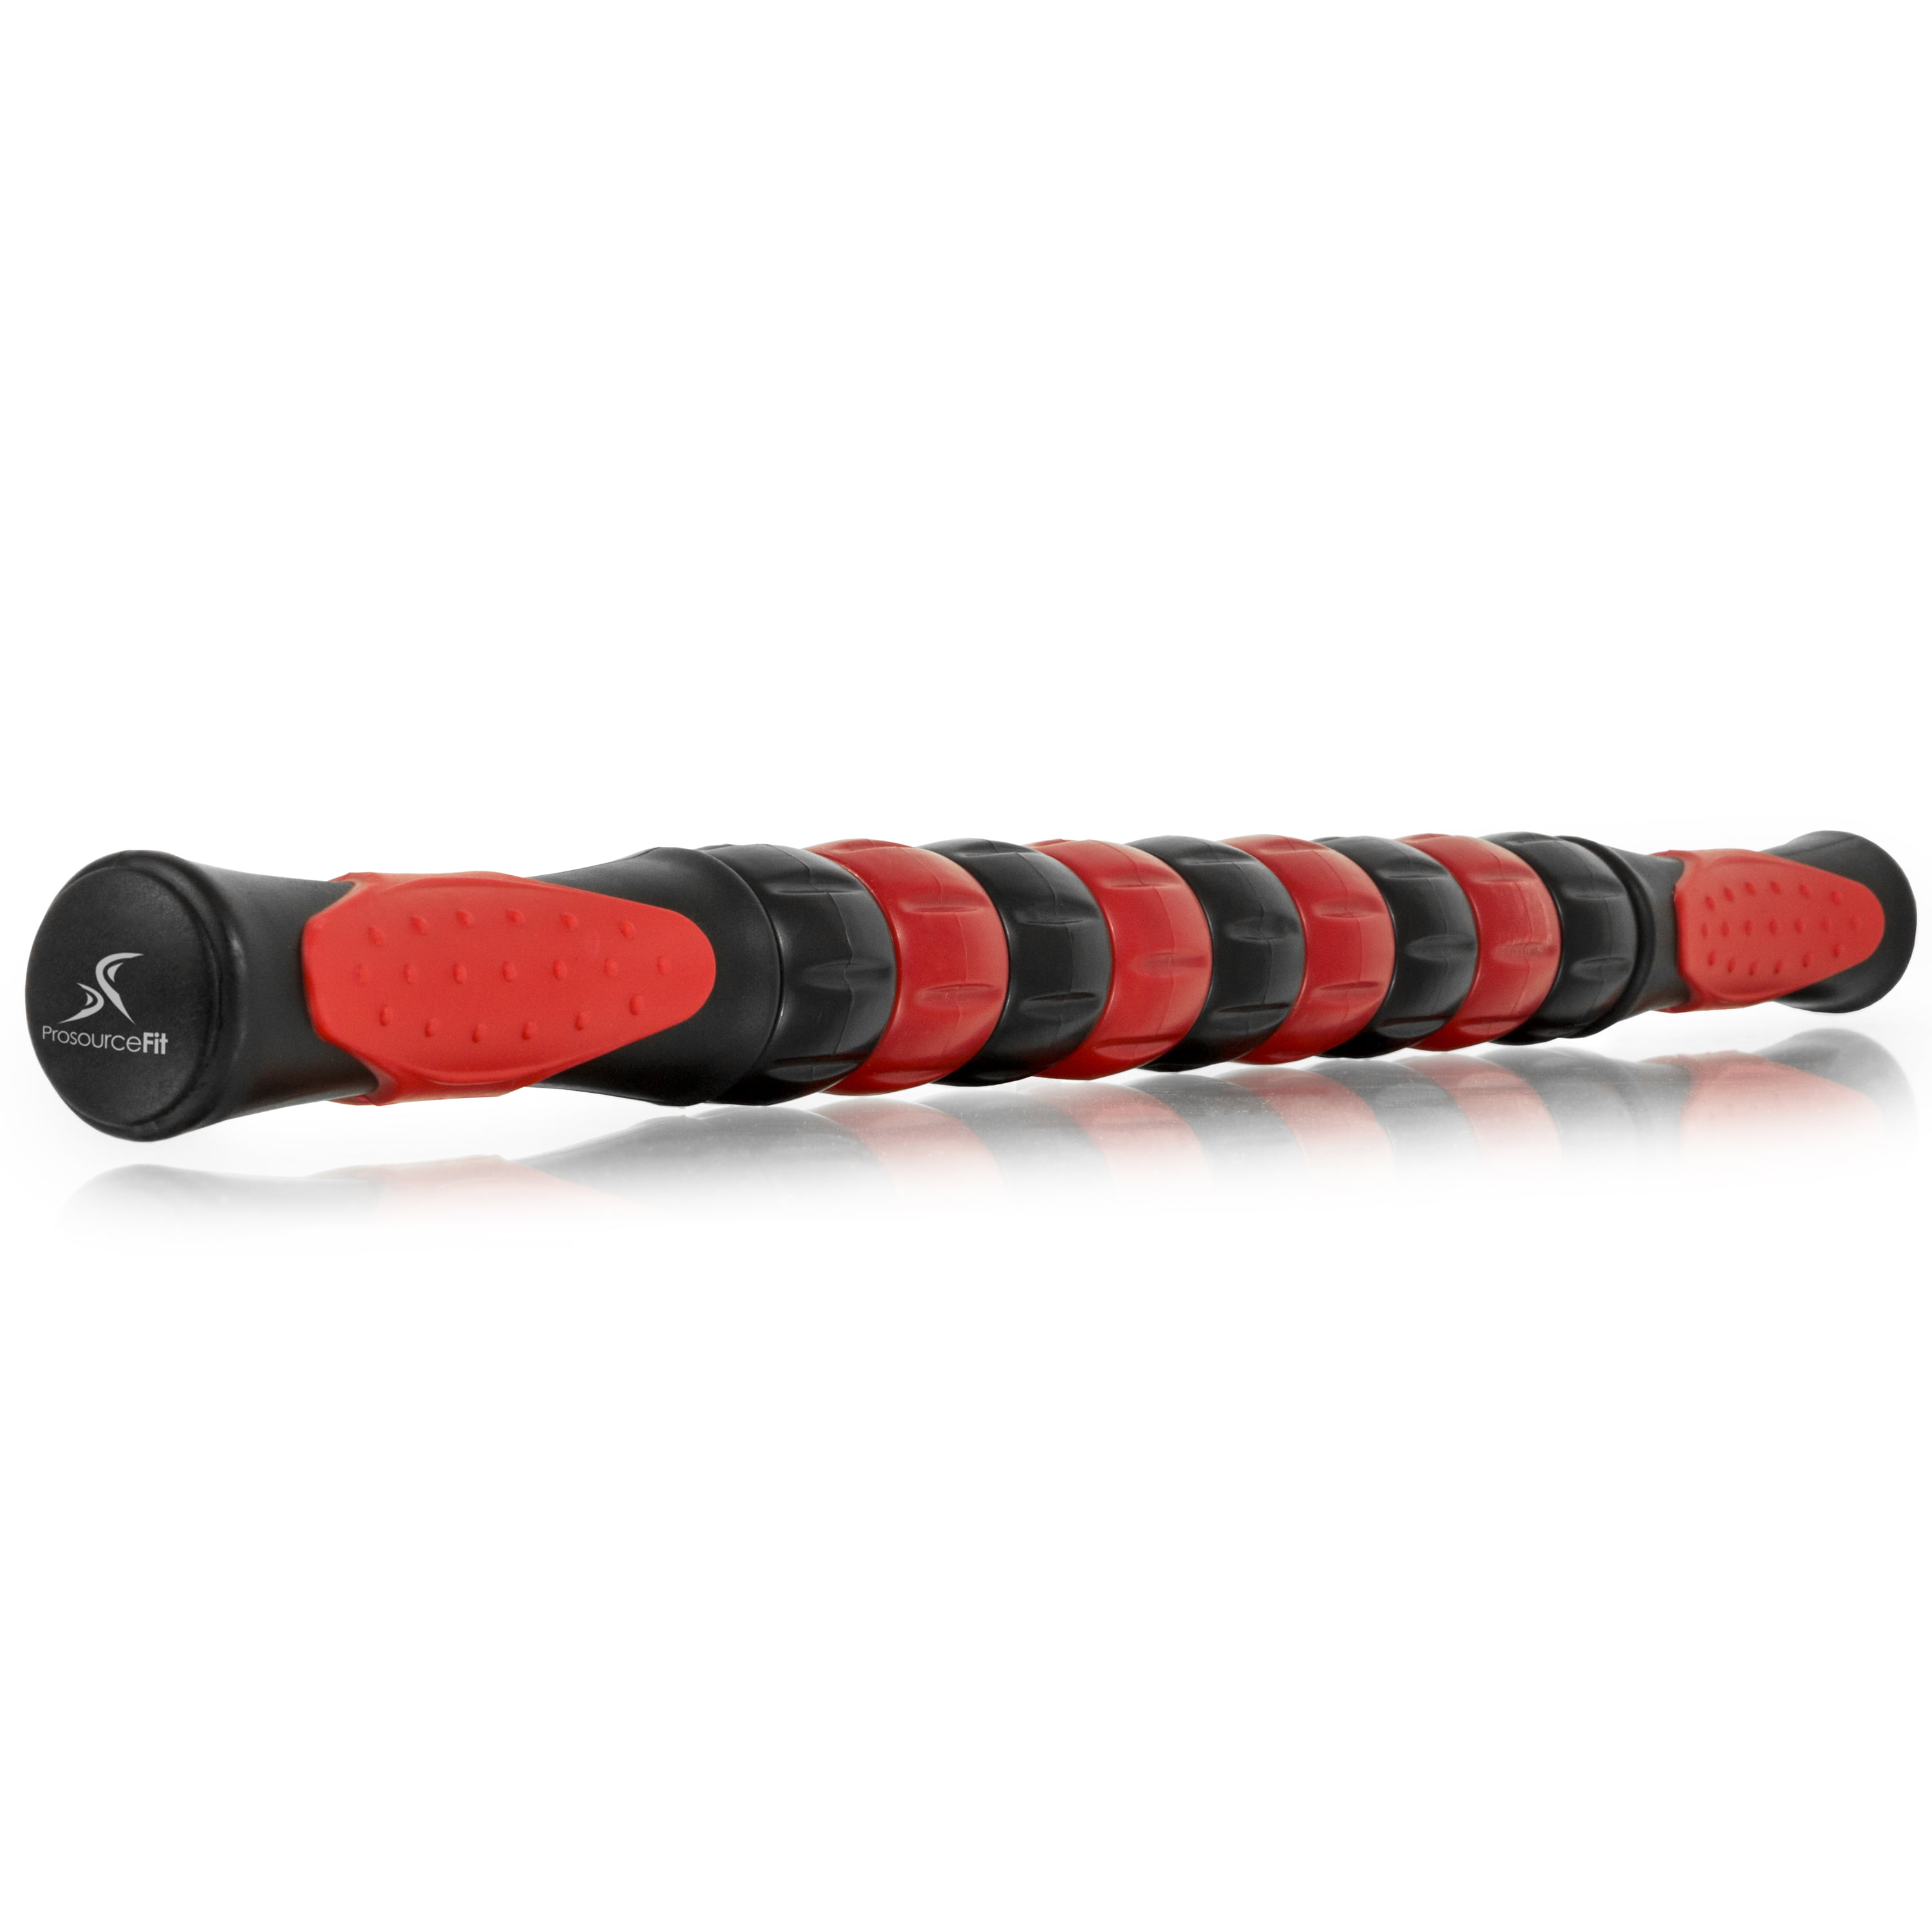 Prosourcefit Massage Stick Roller Portable Self Myofascial Release Tool